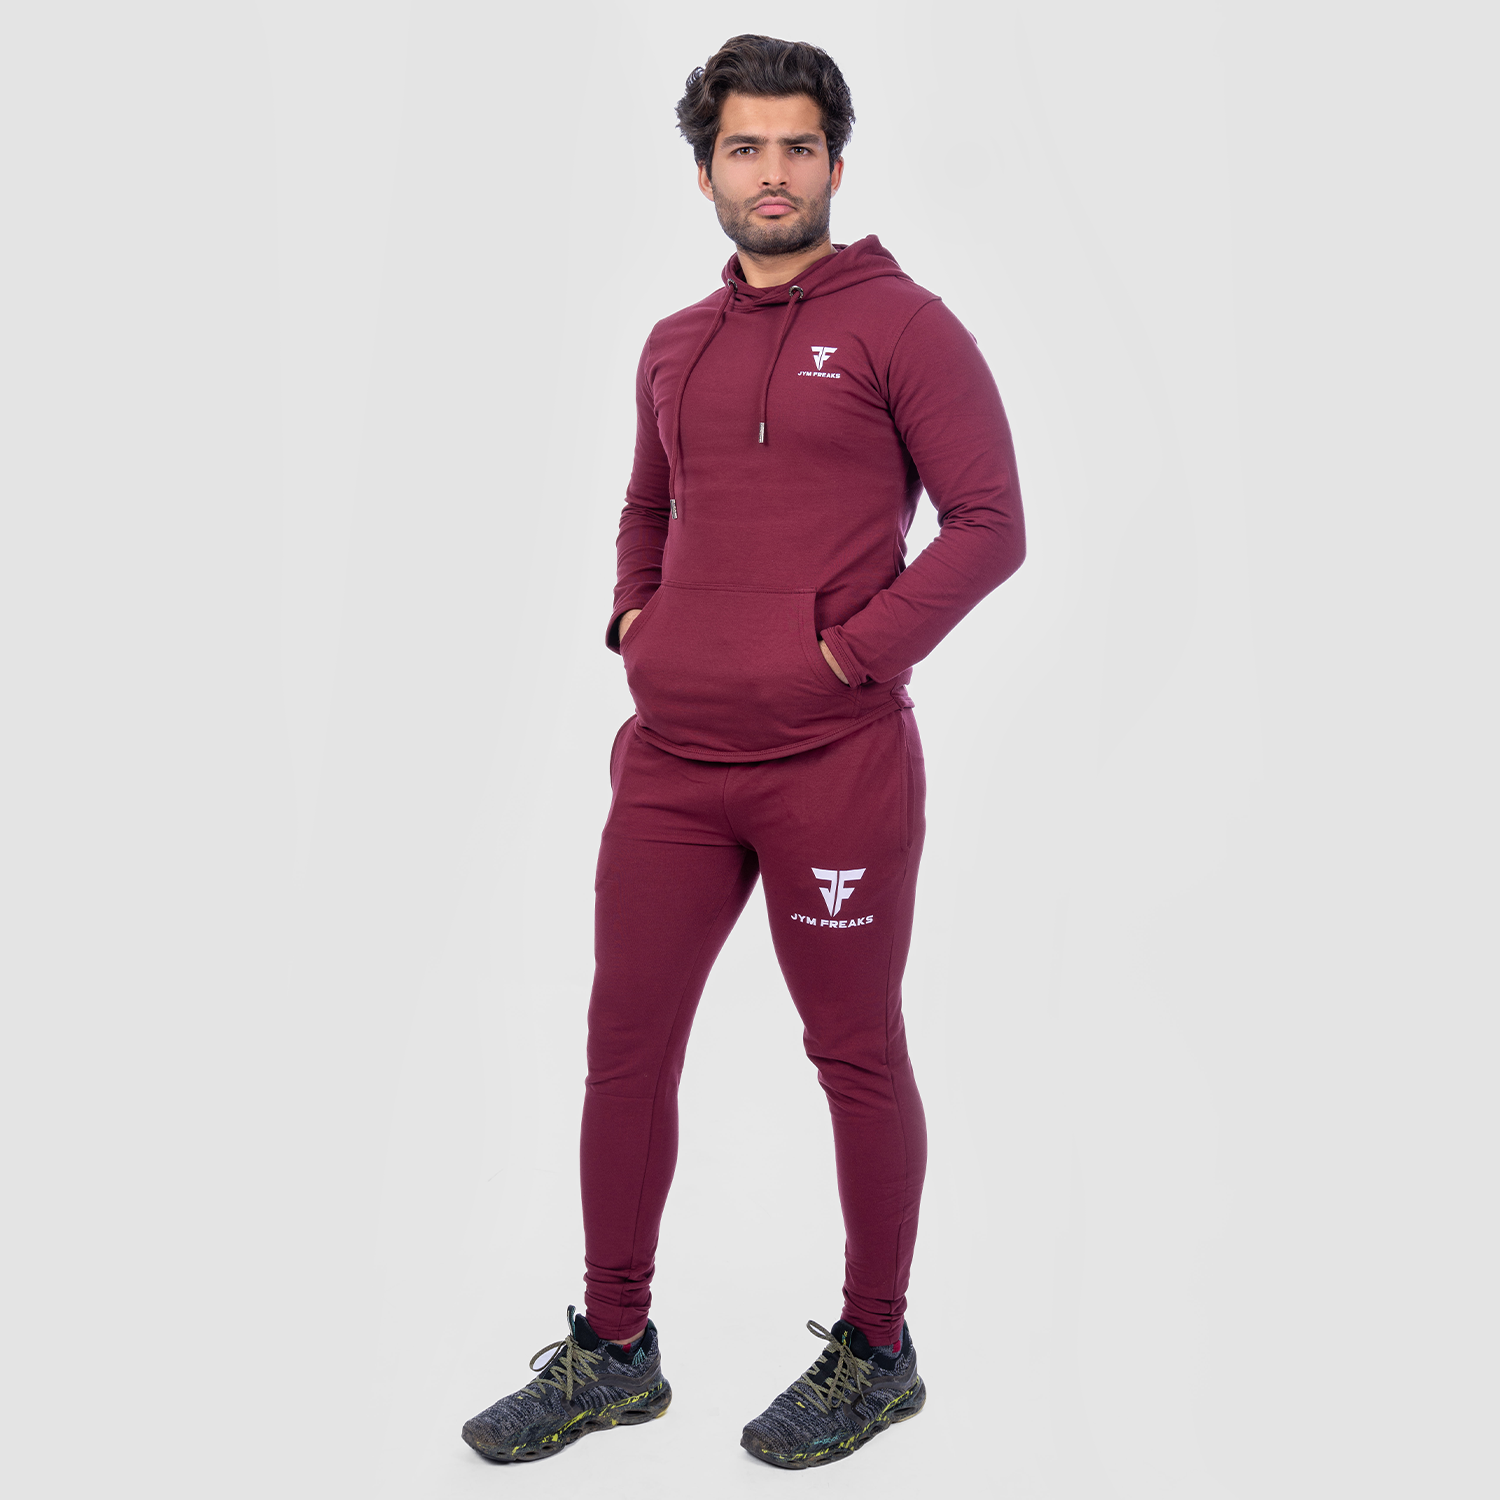 Burgundy Jogging Suit